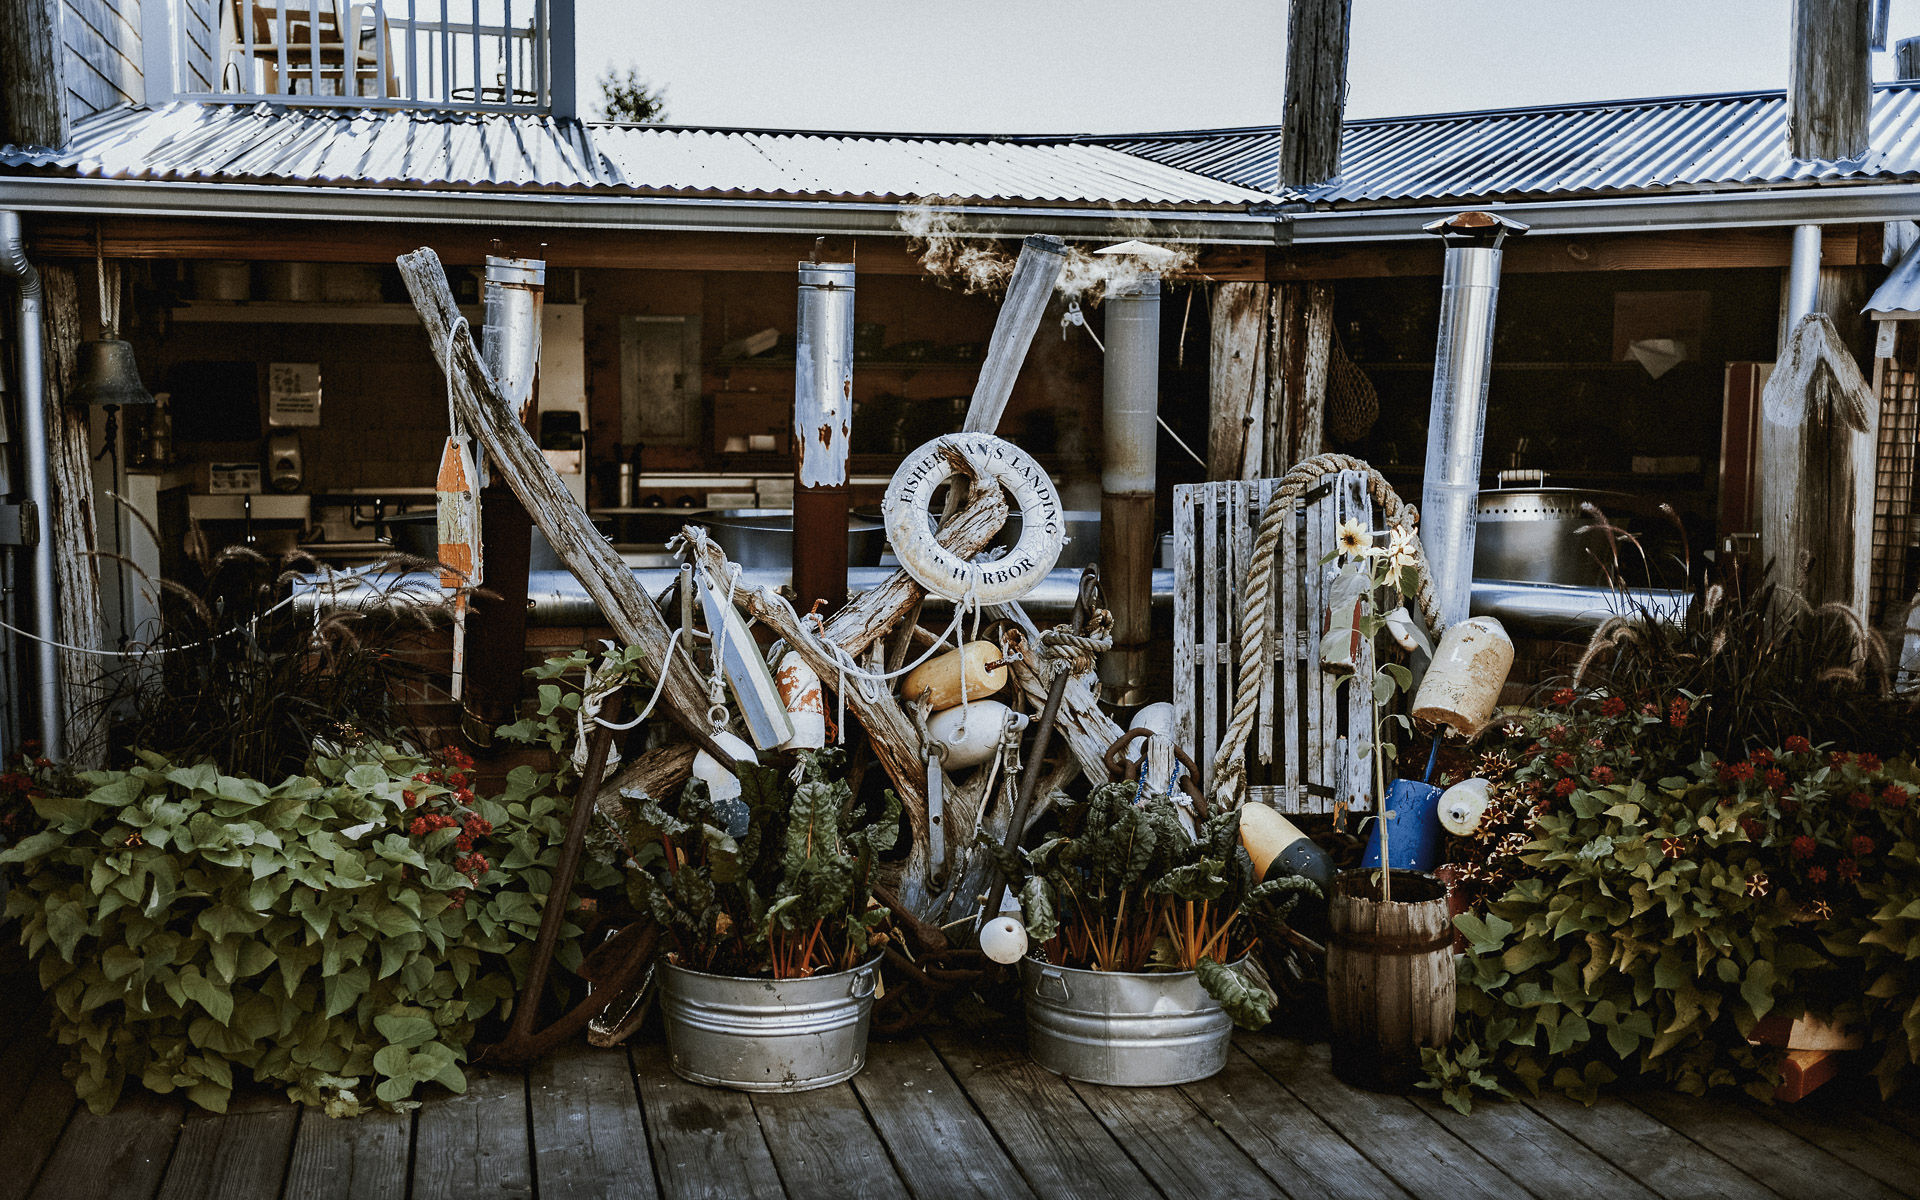 Twisted-oaks-studio-maine-bar-harbor-2019-7.jpg